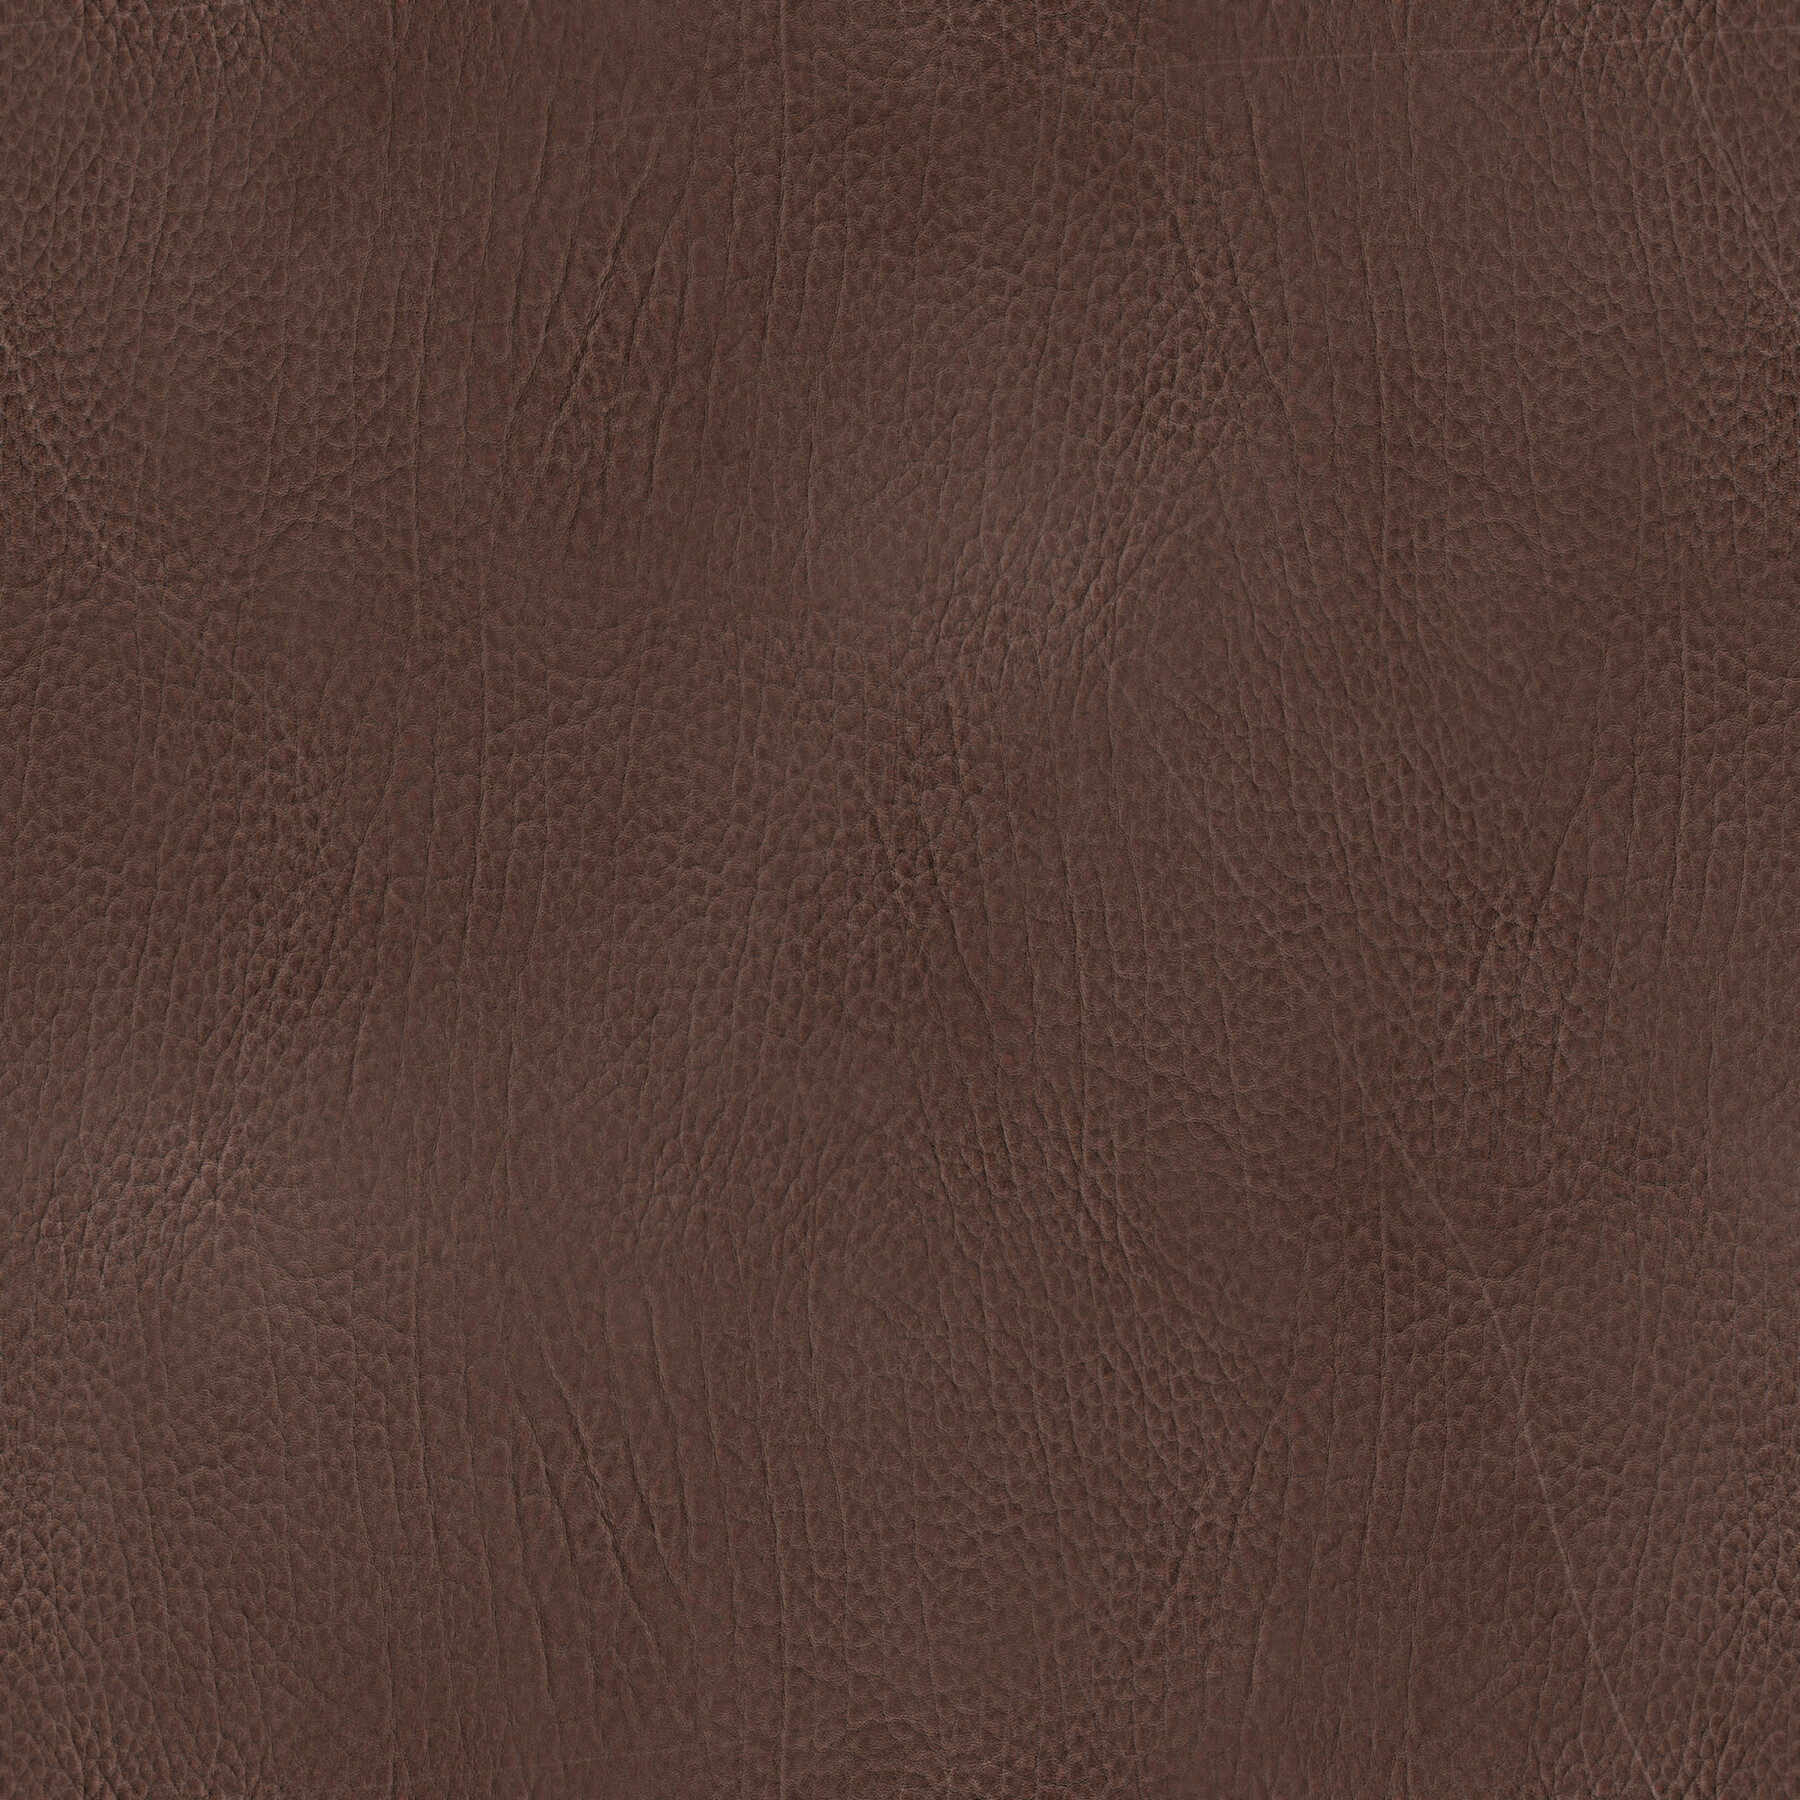 Elegant Seamless Leather Texture